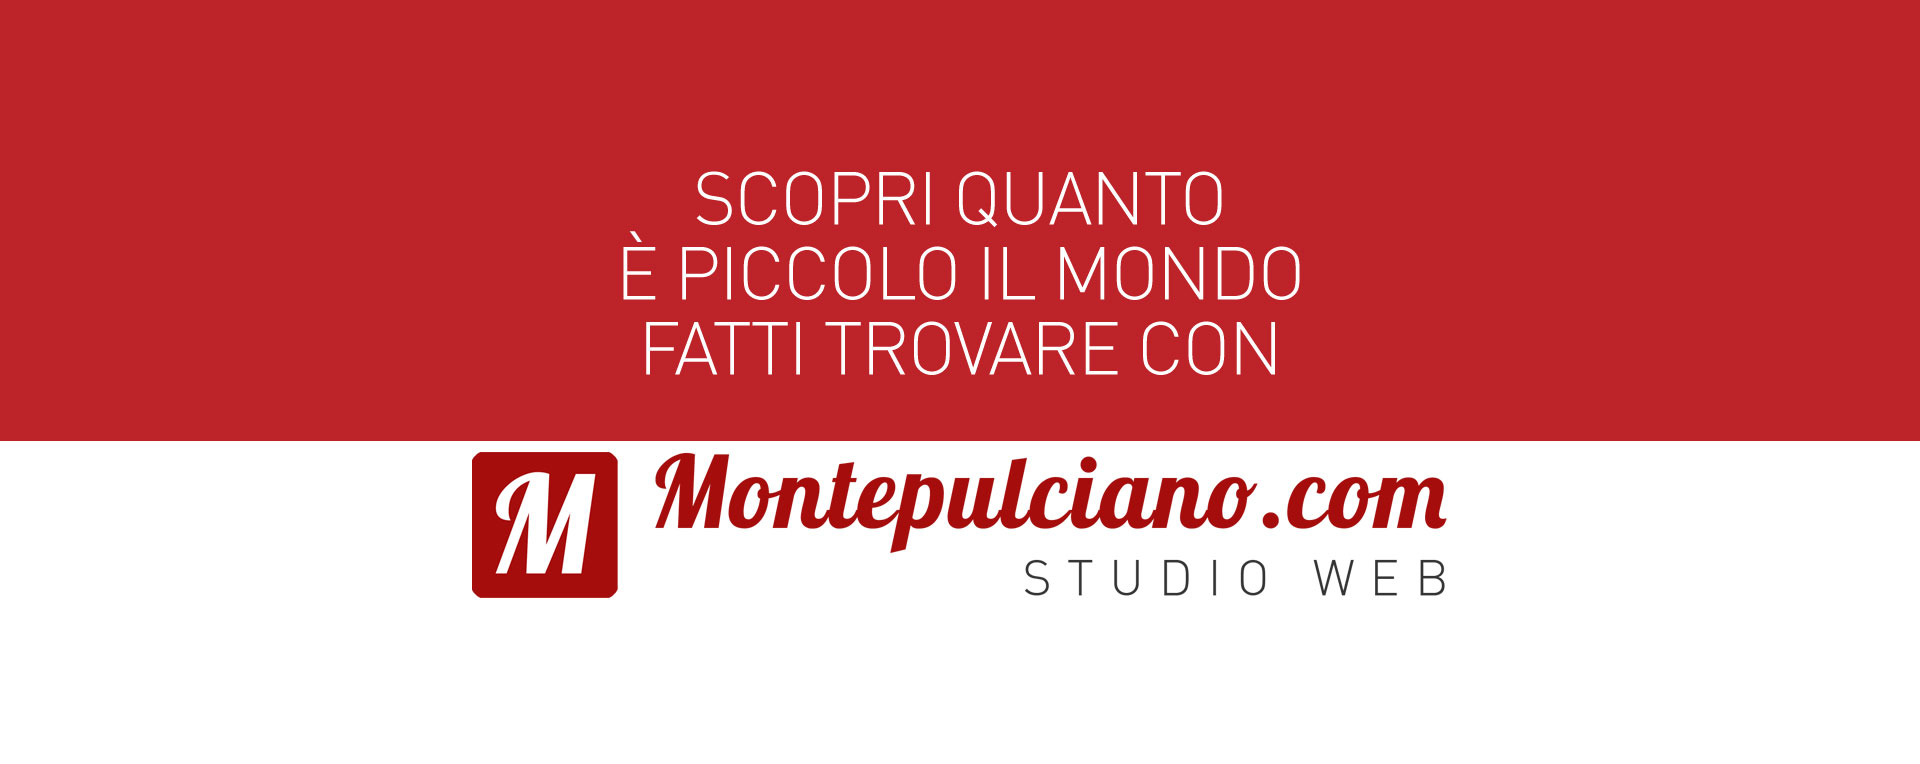 Studio Web Montepulciano.com